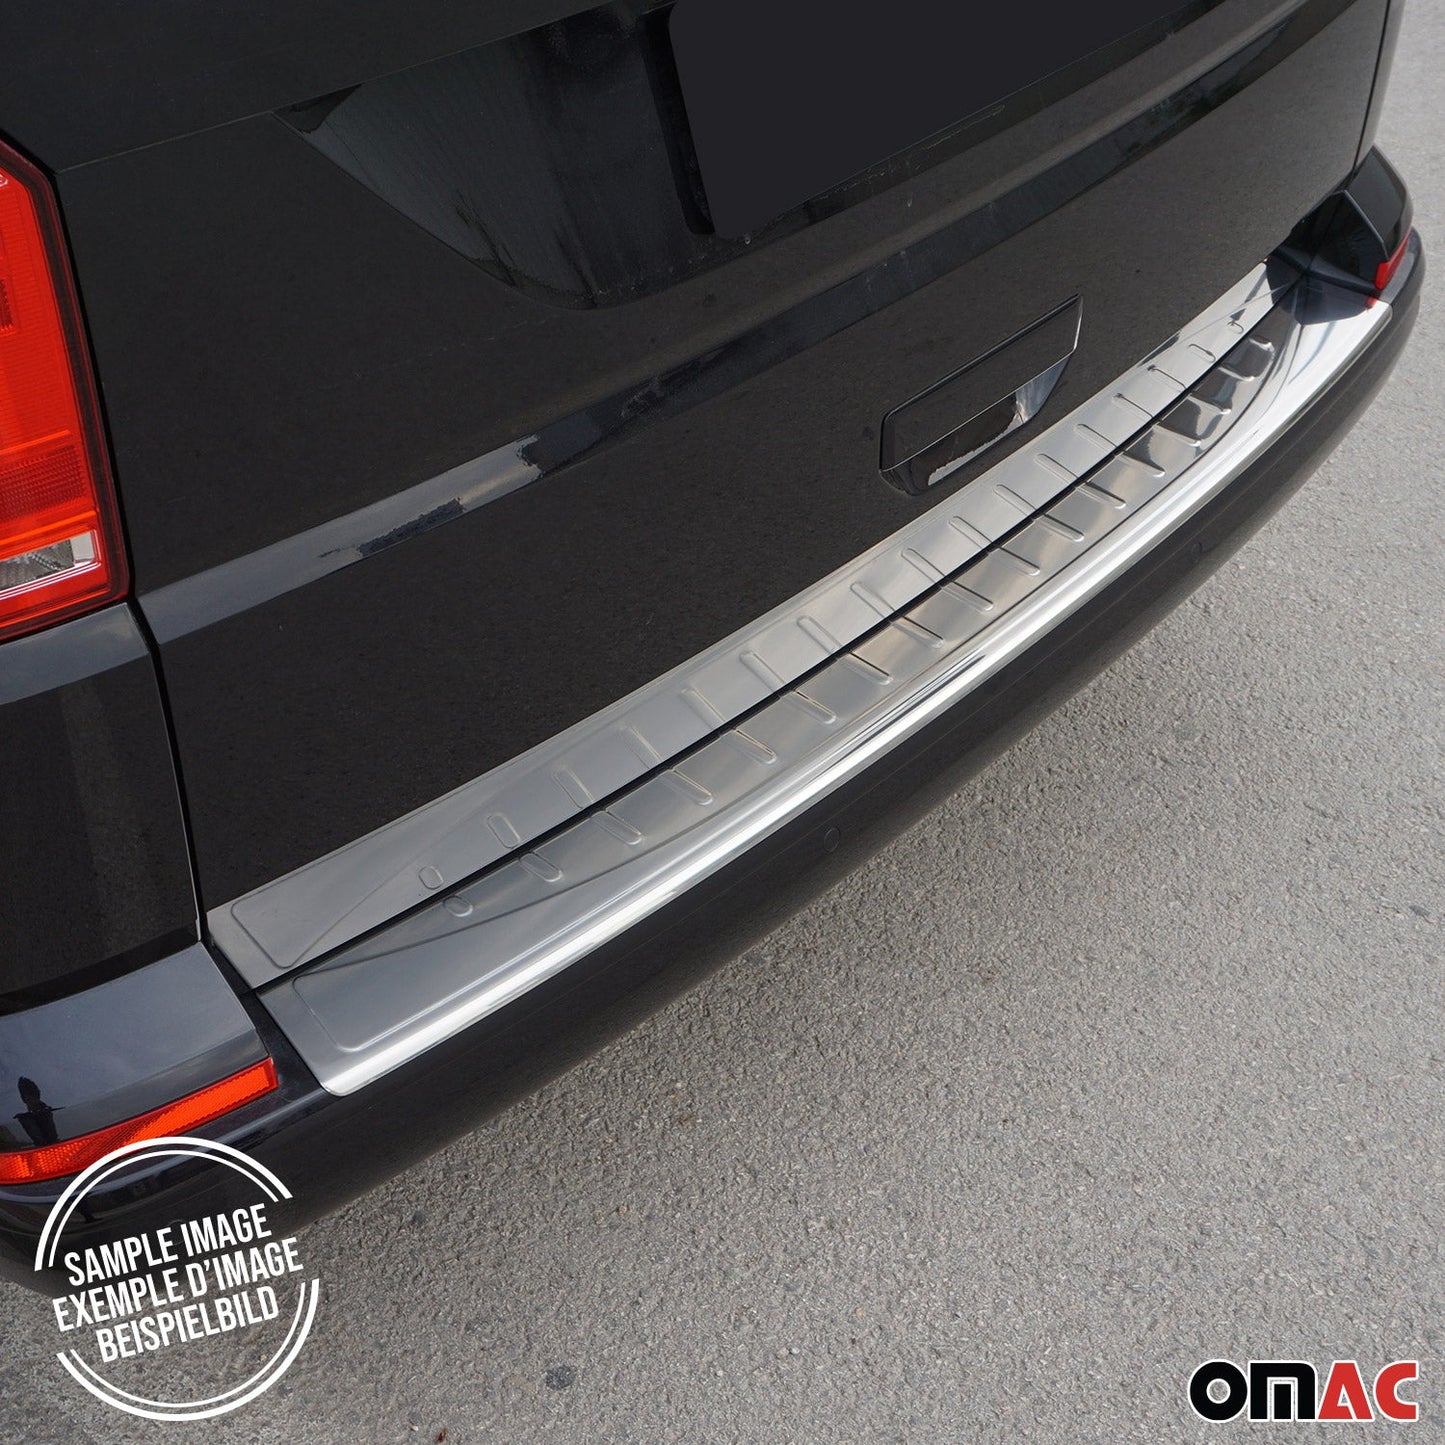 OMAC Rear Bumper Sill Cover Protector Guard for VW Passat B7 2012-2014 Steel Silver 7538095